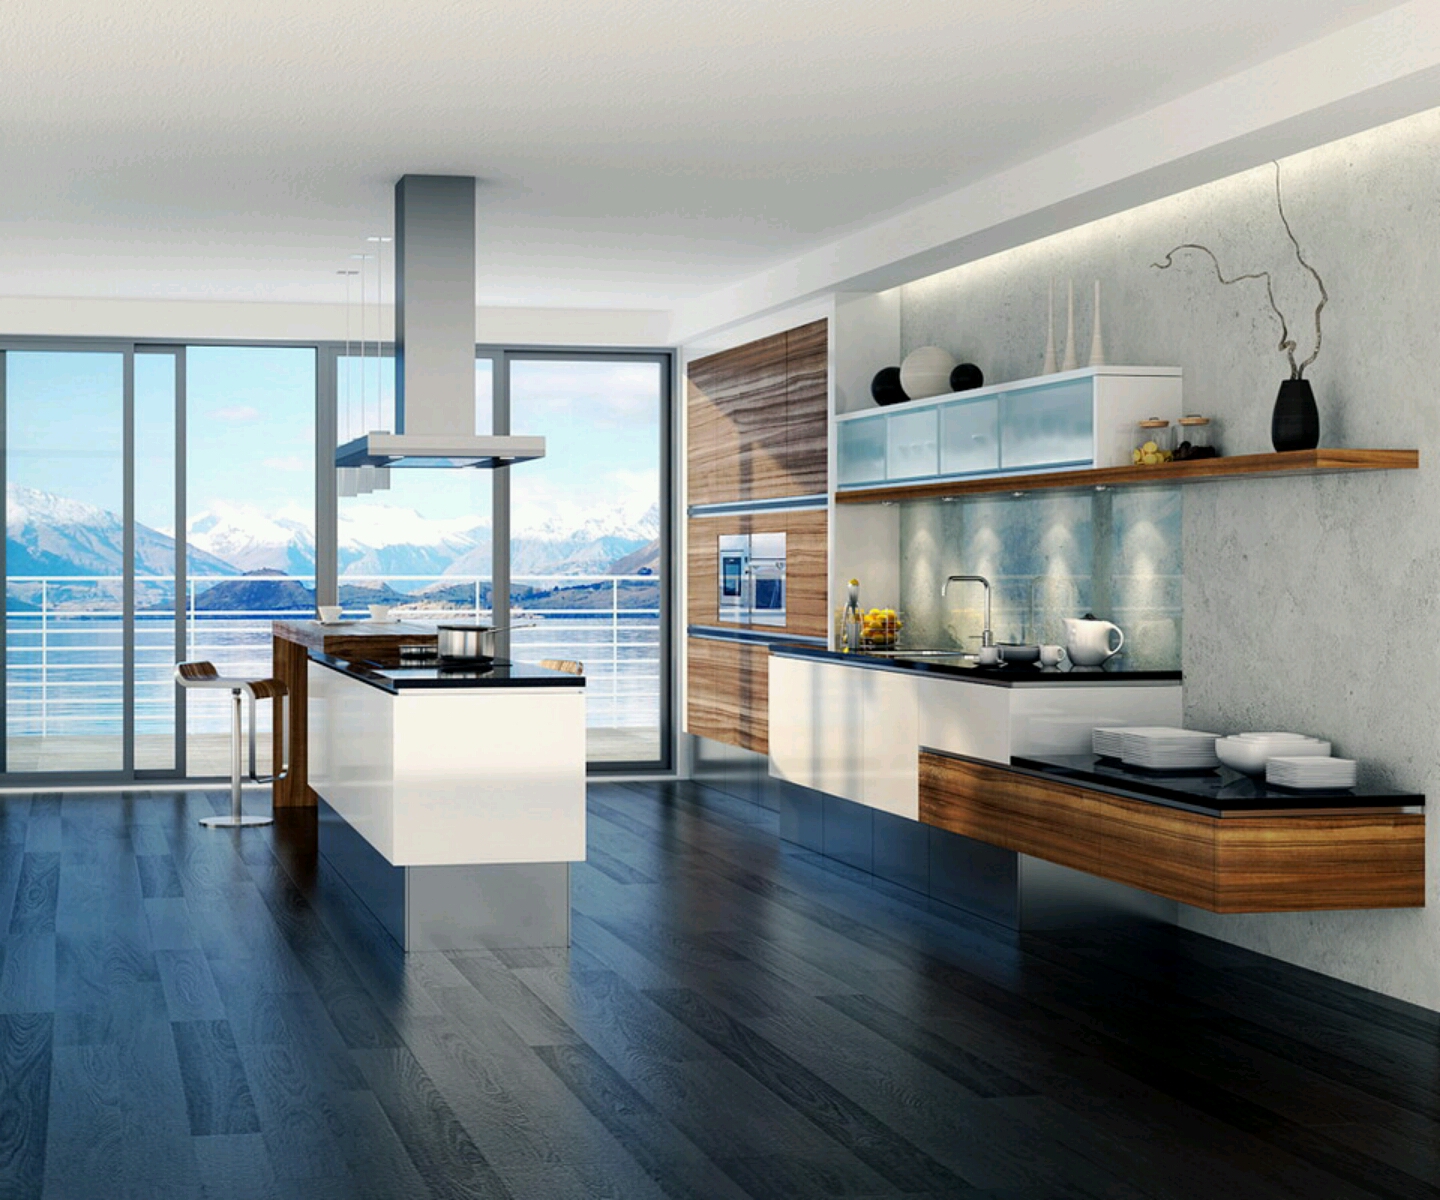 TARA JB'S: Modern homes ultra modern kitchen designs ideas.